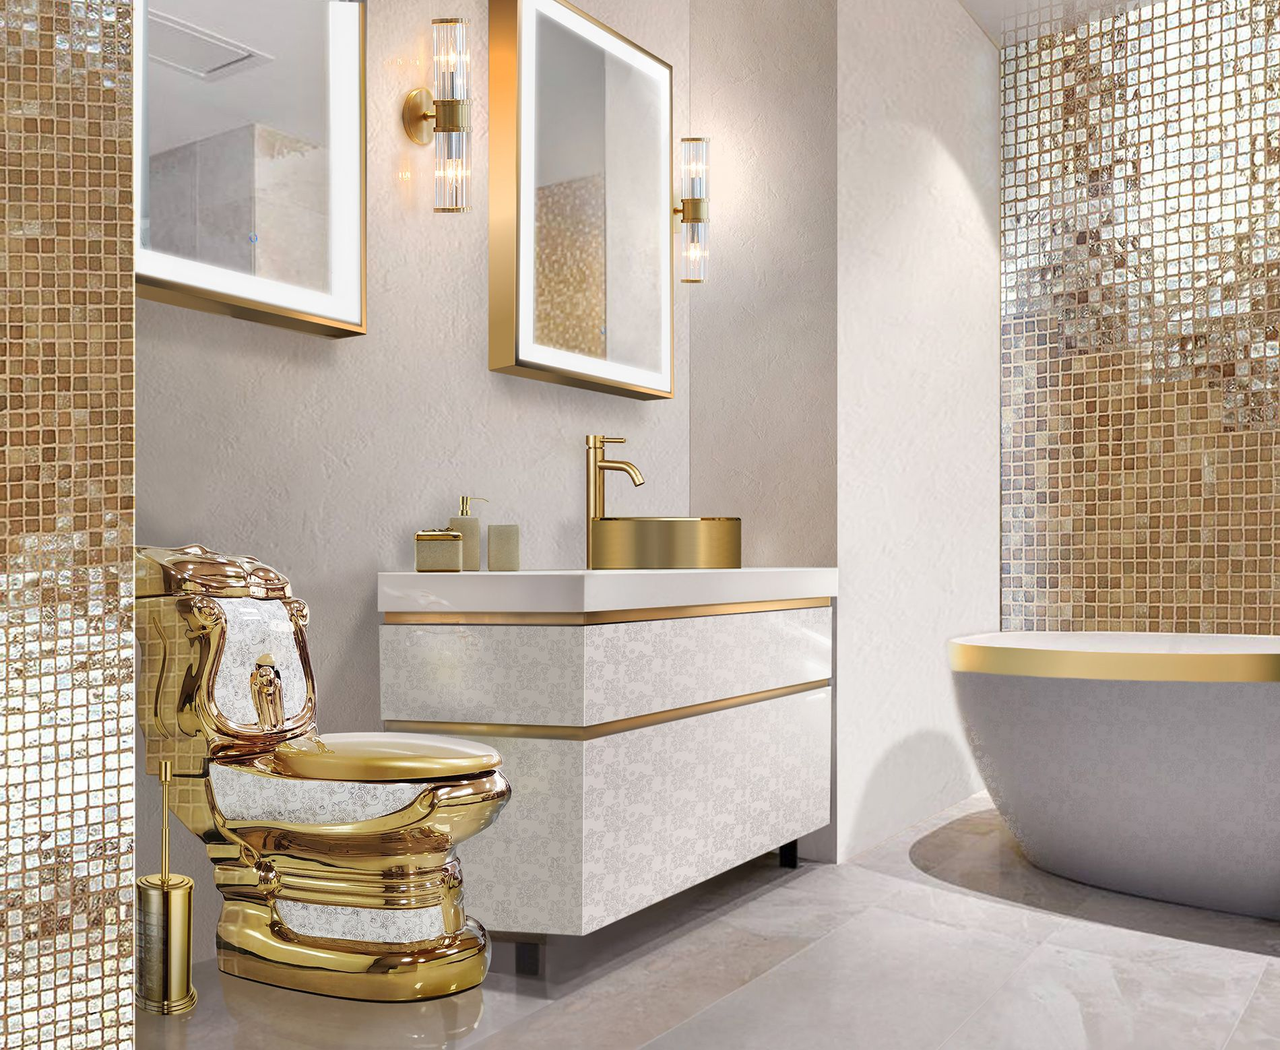 Golden Bath Ltd - Besile one piece toilet